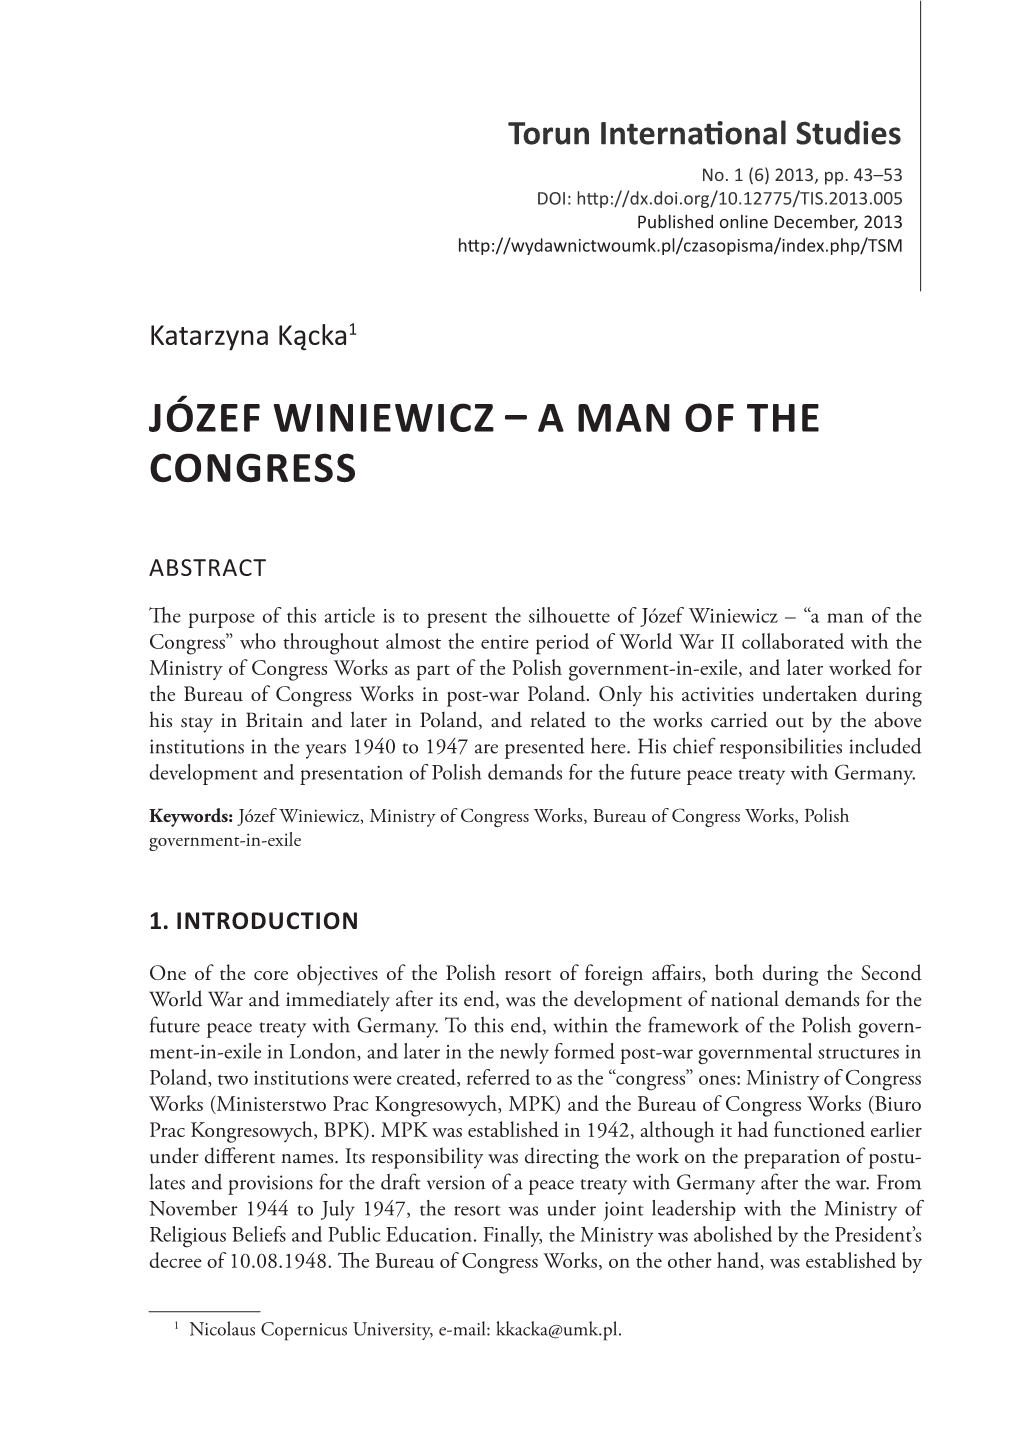 Józef Winiewicz – a Man of the Congress